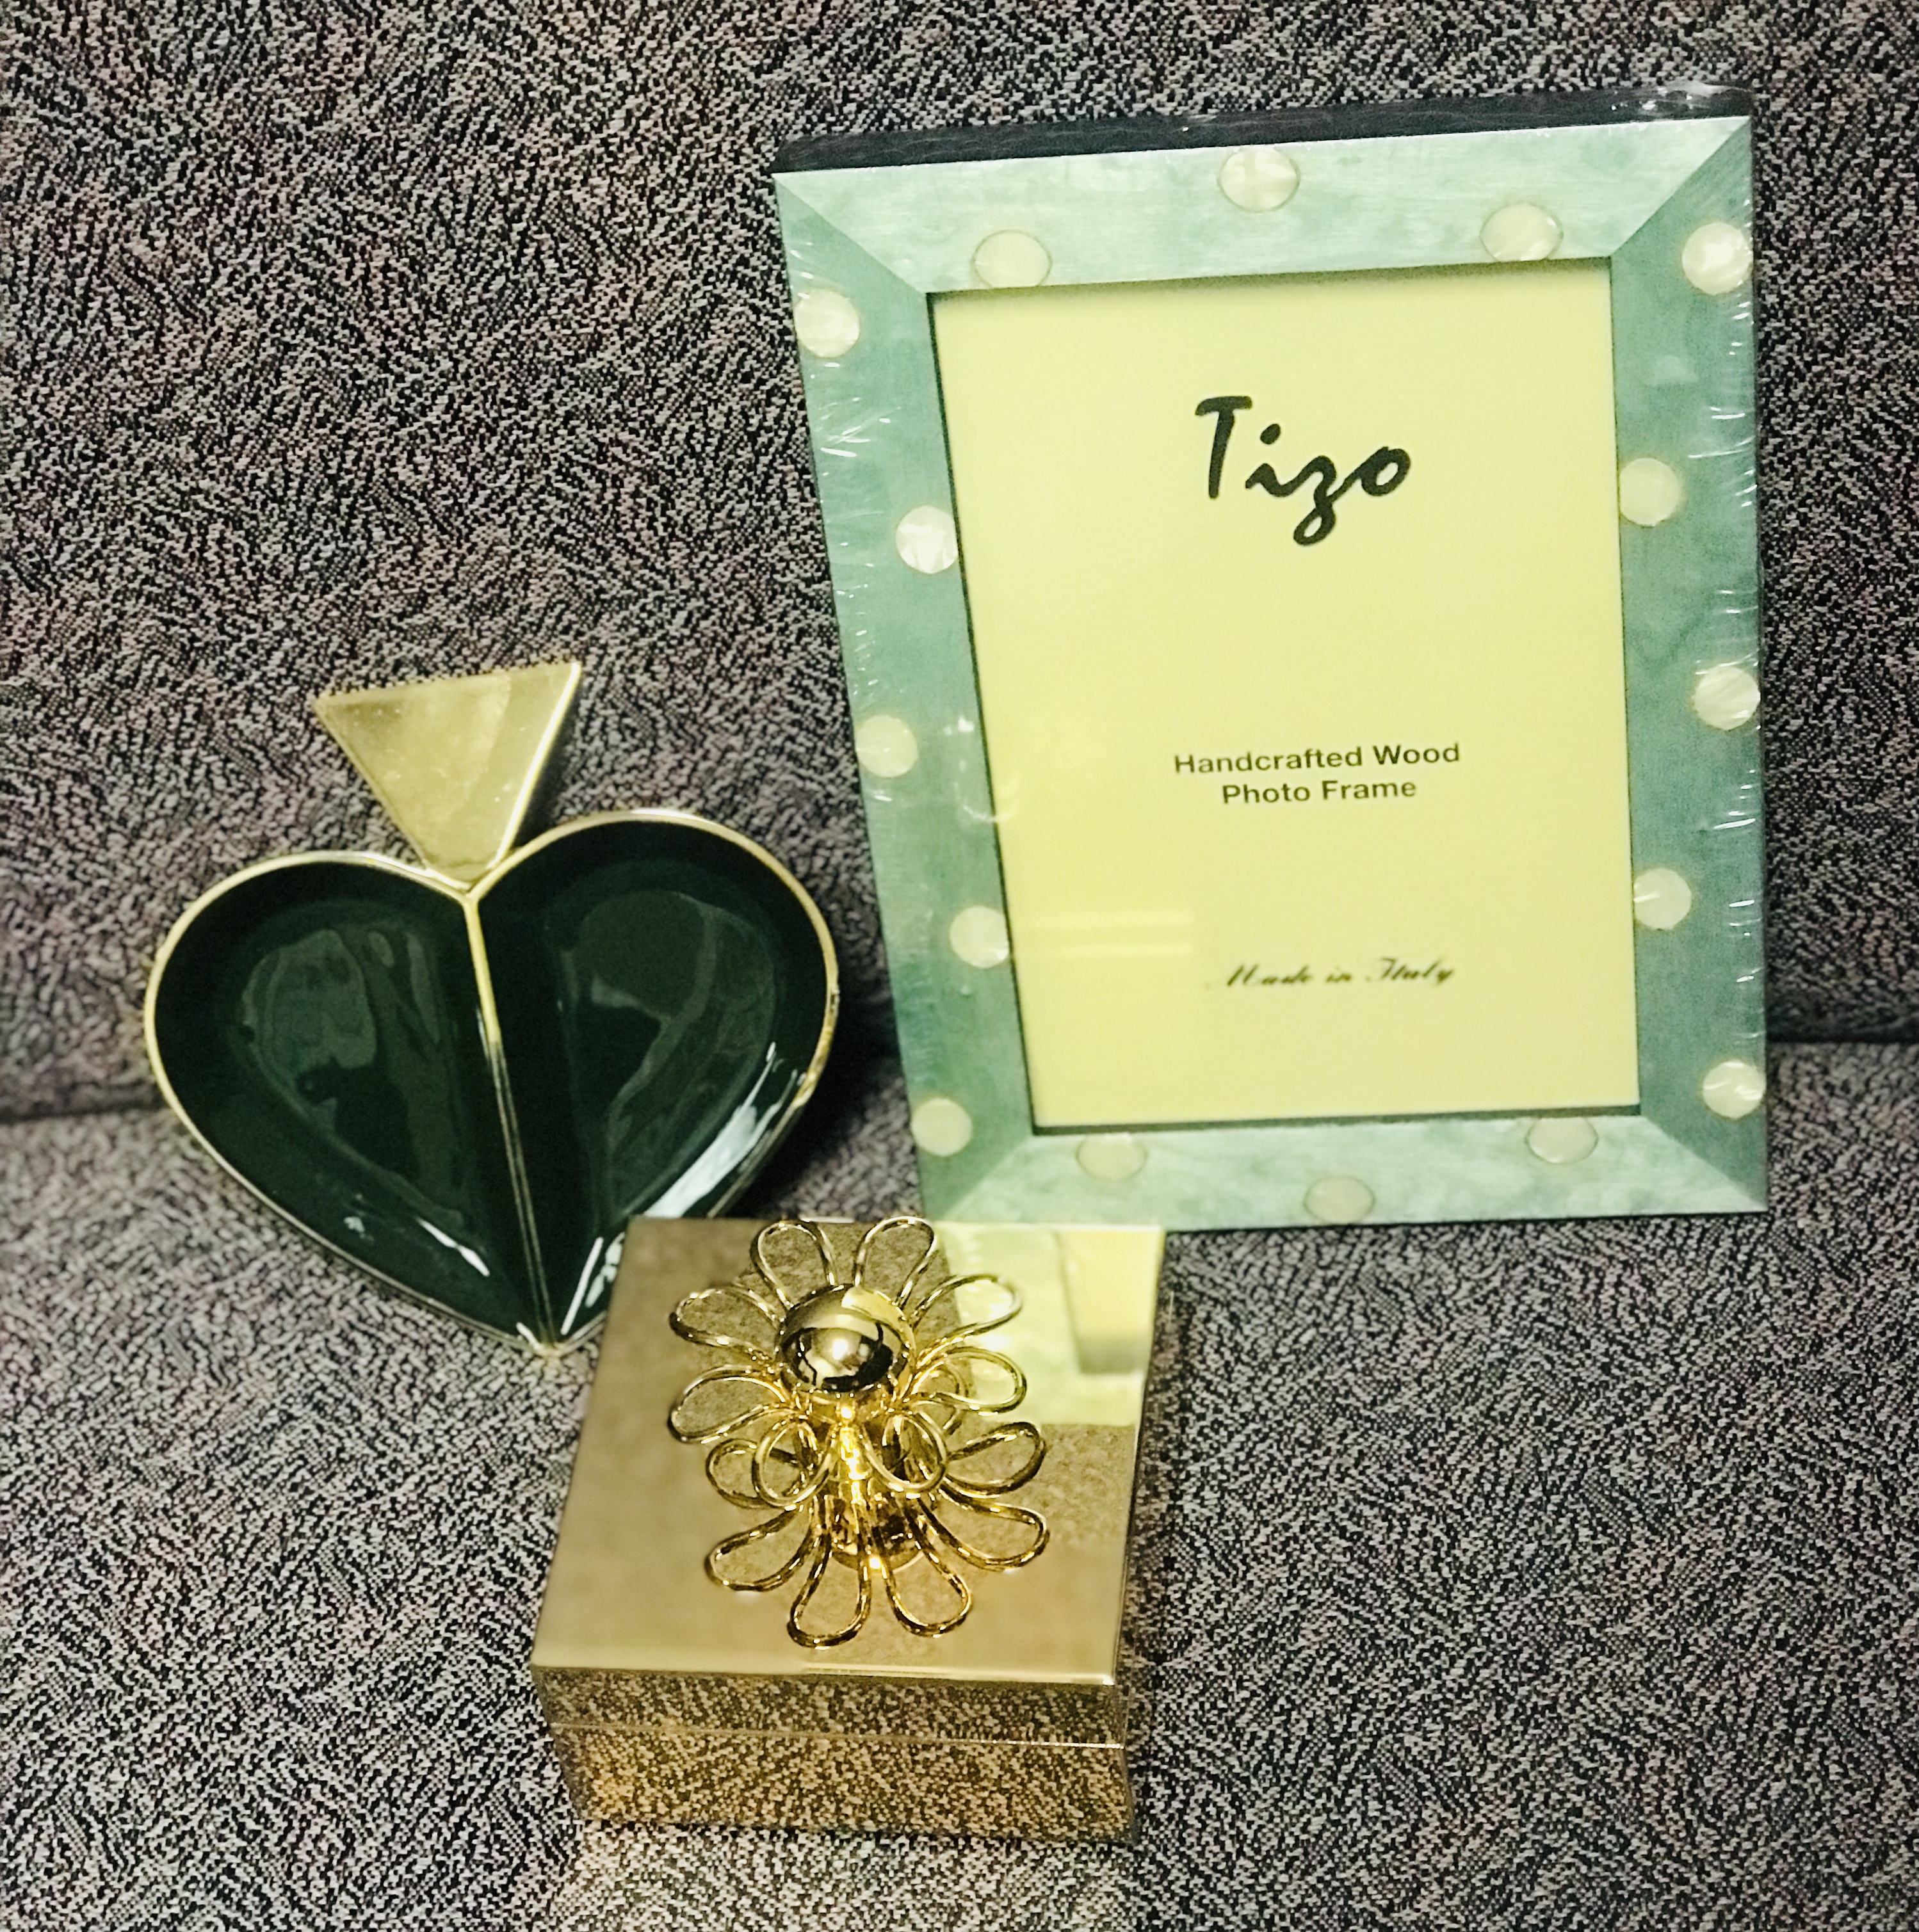 Kate Spade jewelry box & dish, Tizo photo frame | omahag ...